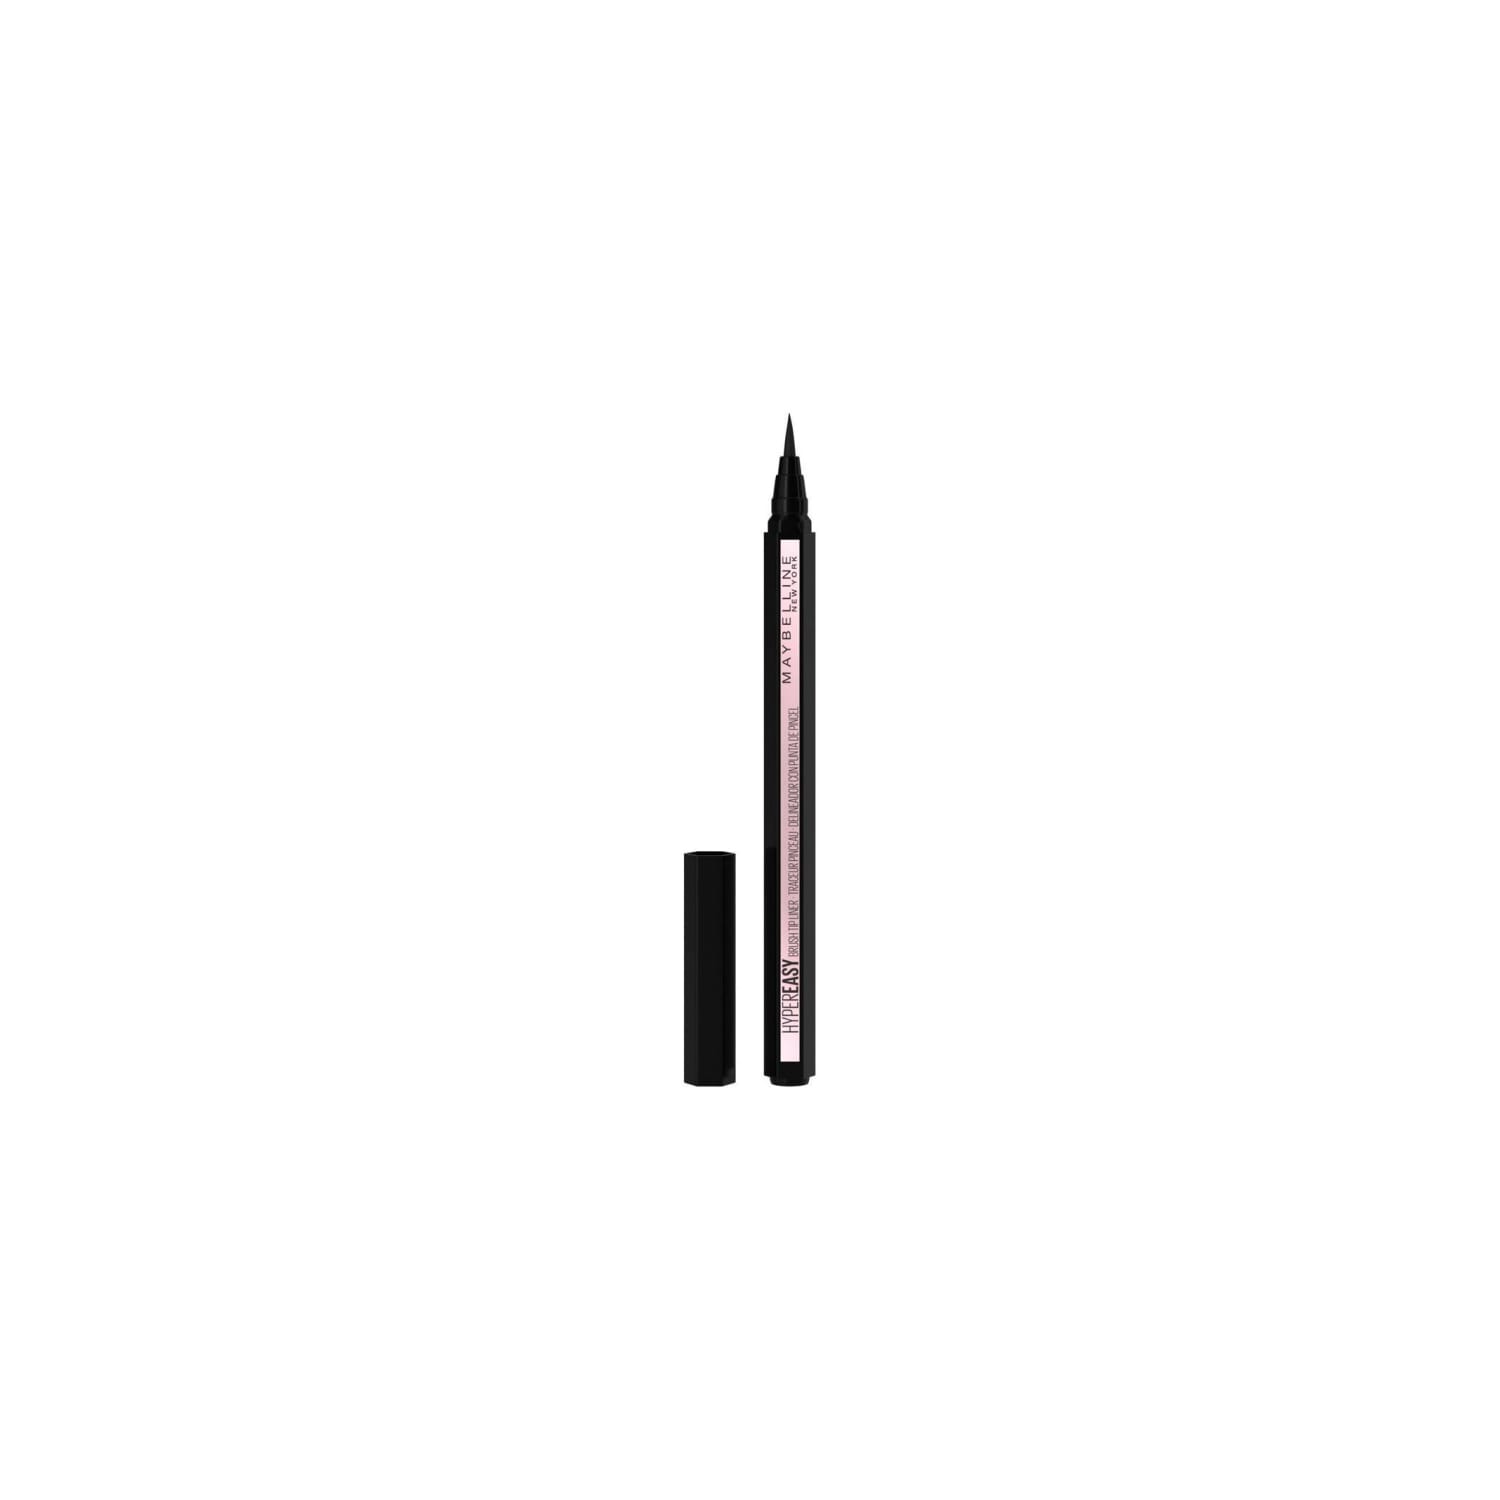 SKETCH EYELINER in just Rs.100 | ADS Sketch Eyeliner Pen Review & Swatch |  Affordable Indian Makeup - YouTube